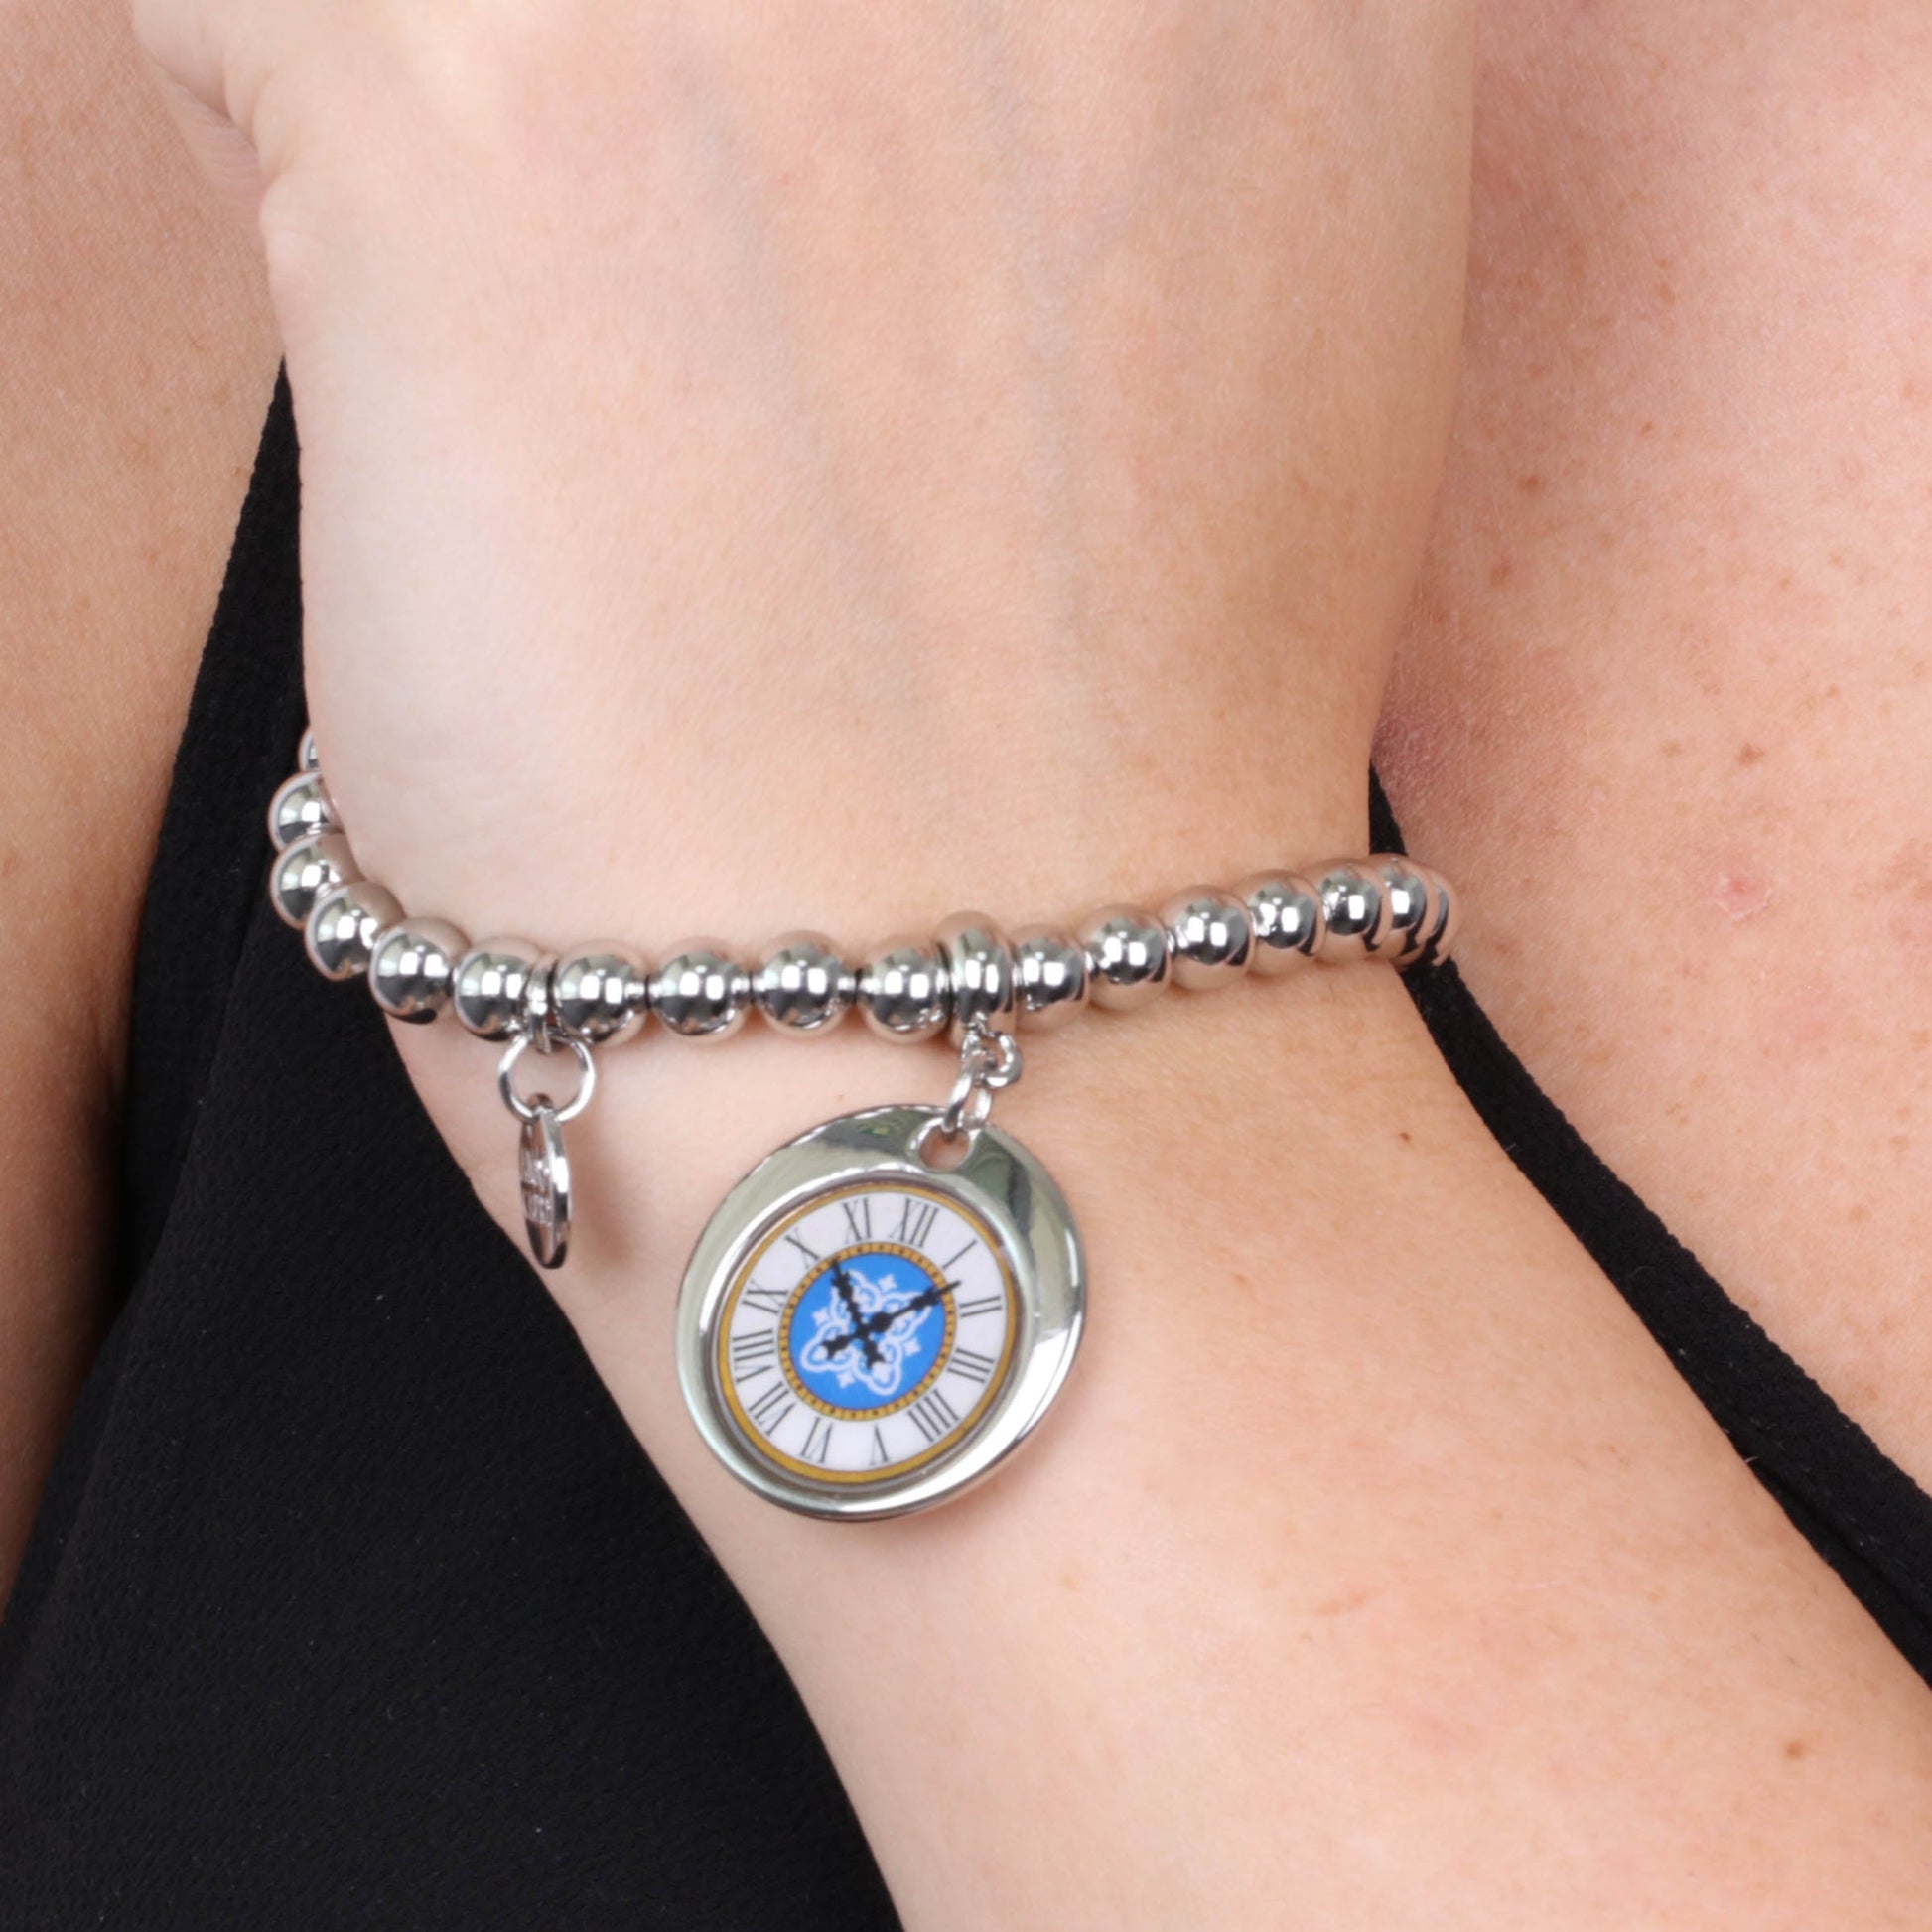 Metal bracelet spheres shirt, with capri clock symbol with colored glazes